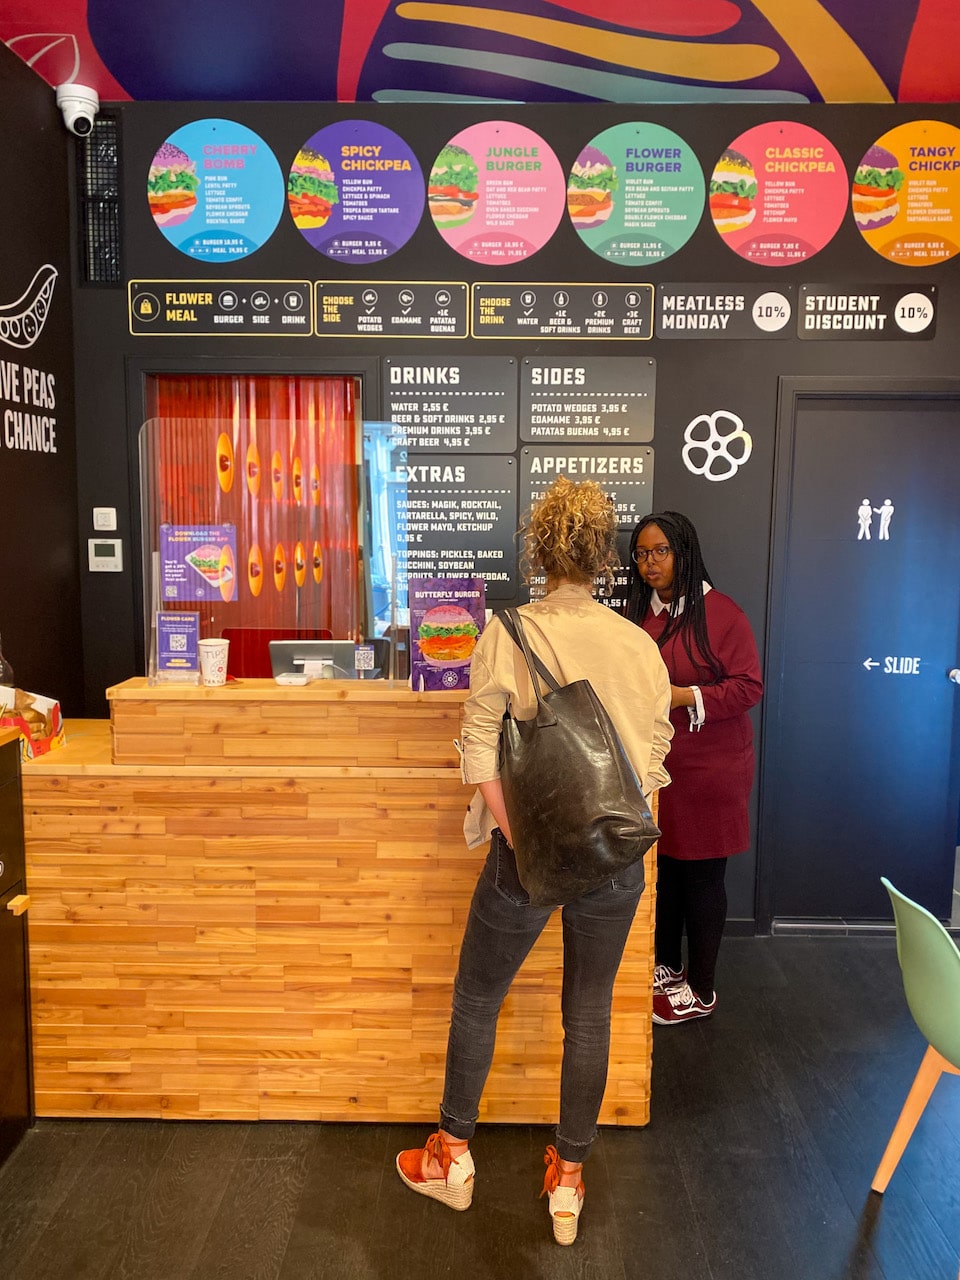 vegan restaurant - hotspots in Amsterdam 2021 - Flower Burger